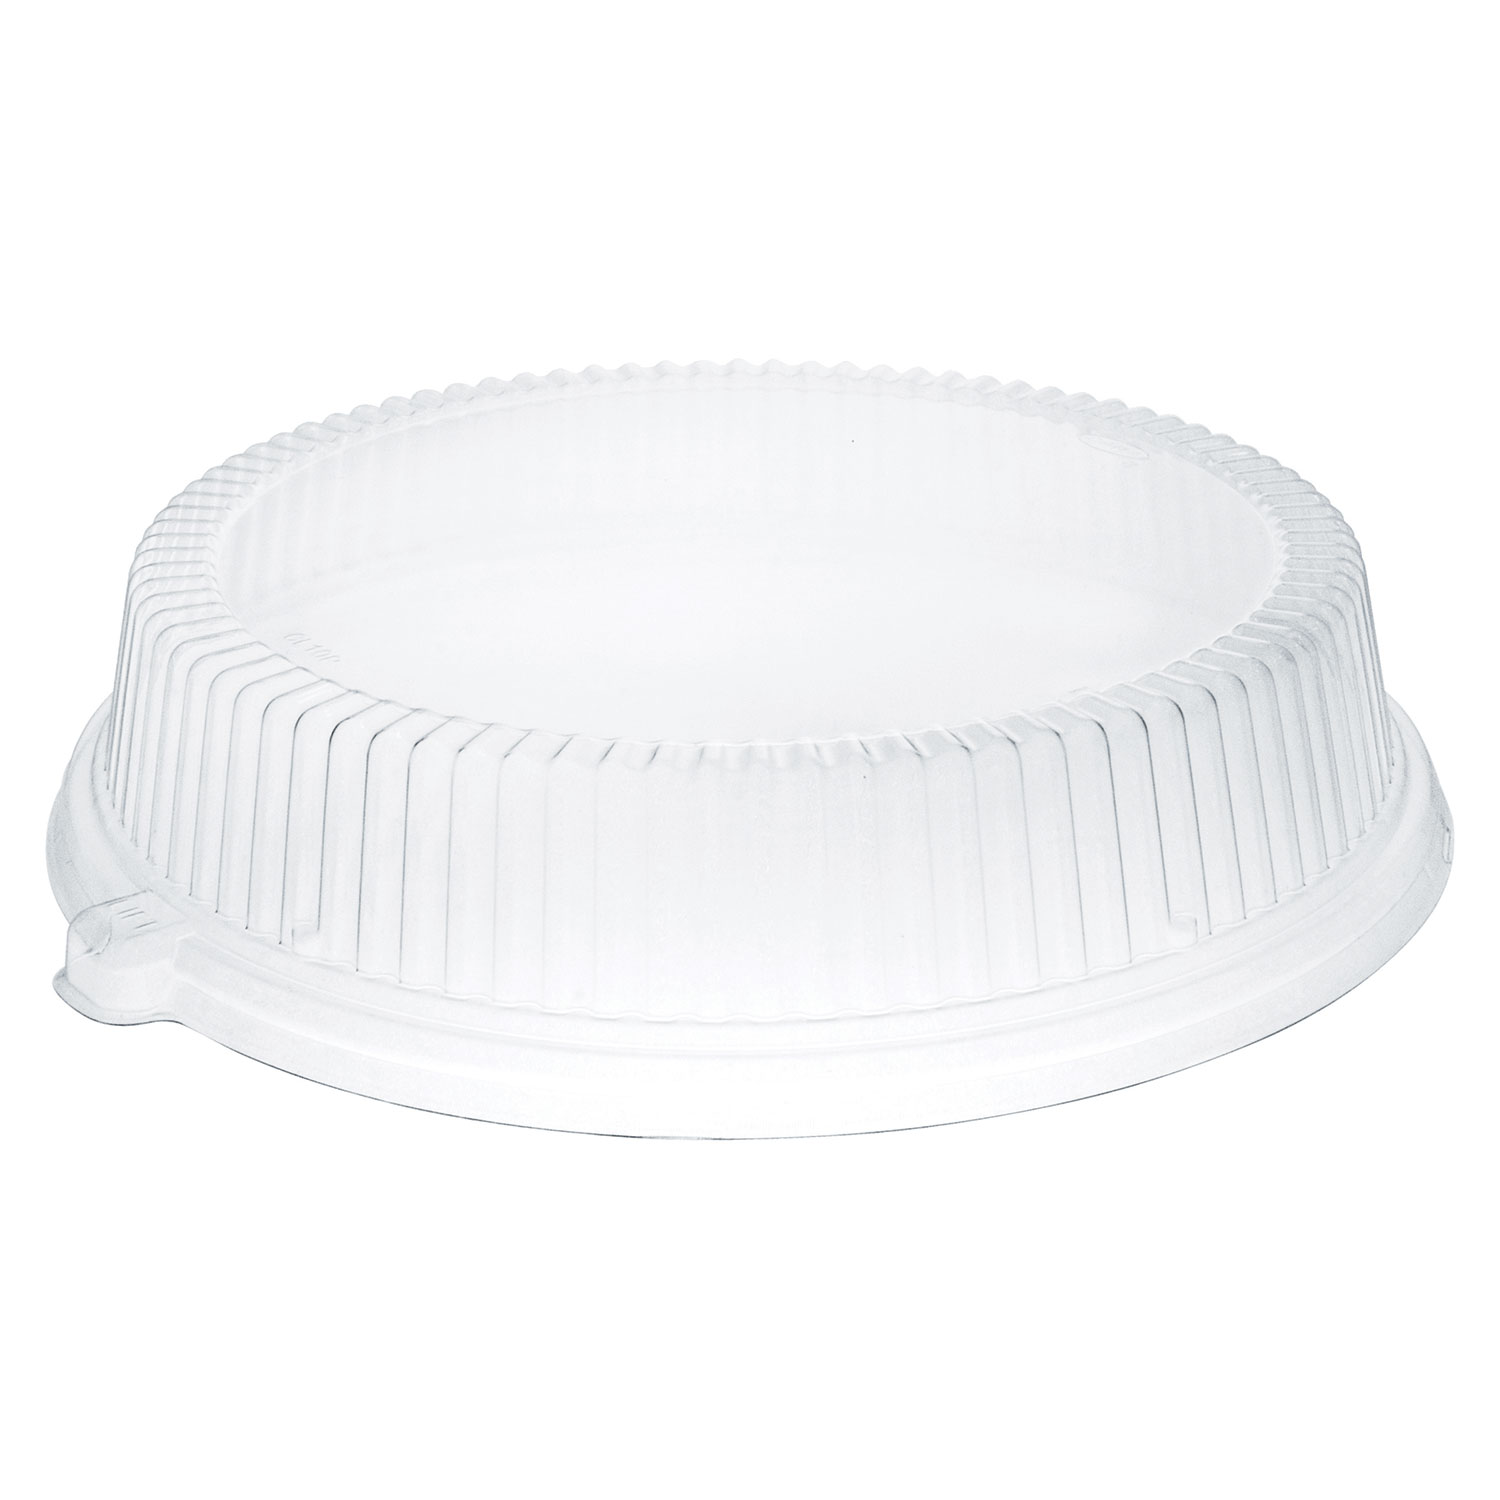  Dart CL10P Dome Covers fit 10 Disposable Plates, Clear, 500/Carton (DCCCL10P) 